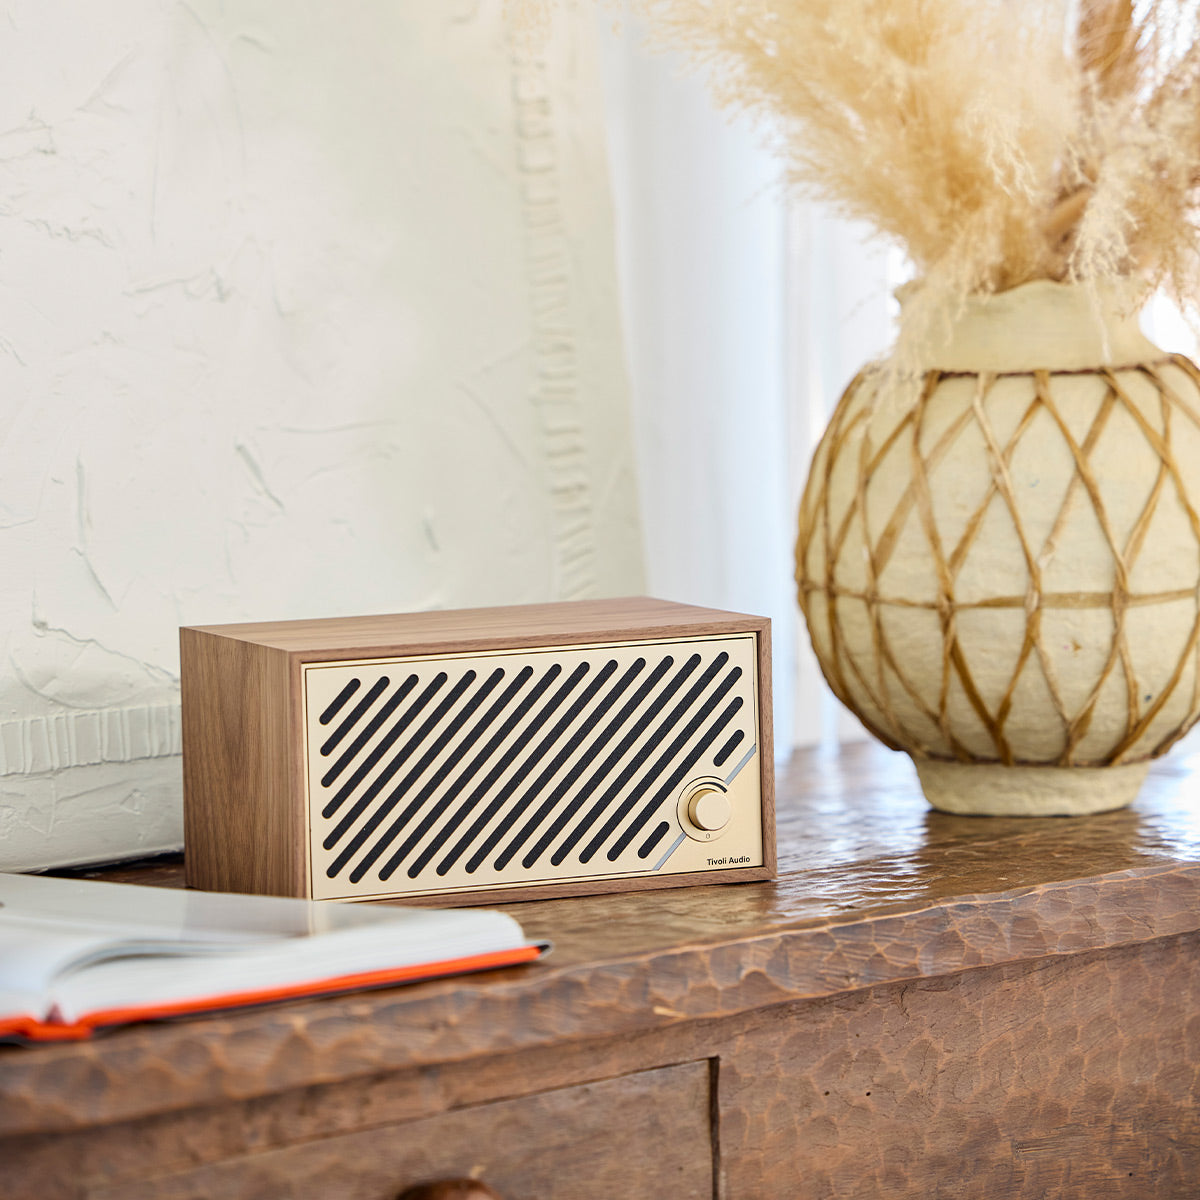 Tivoli Audio Model Two Digital Bluetooth Speaker with Built-In Airplay2, Chromecast, and Wi-Fi (Walnut/Gold)